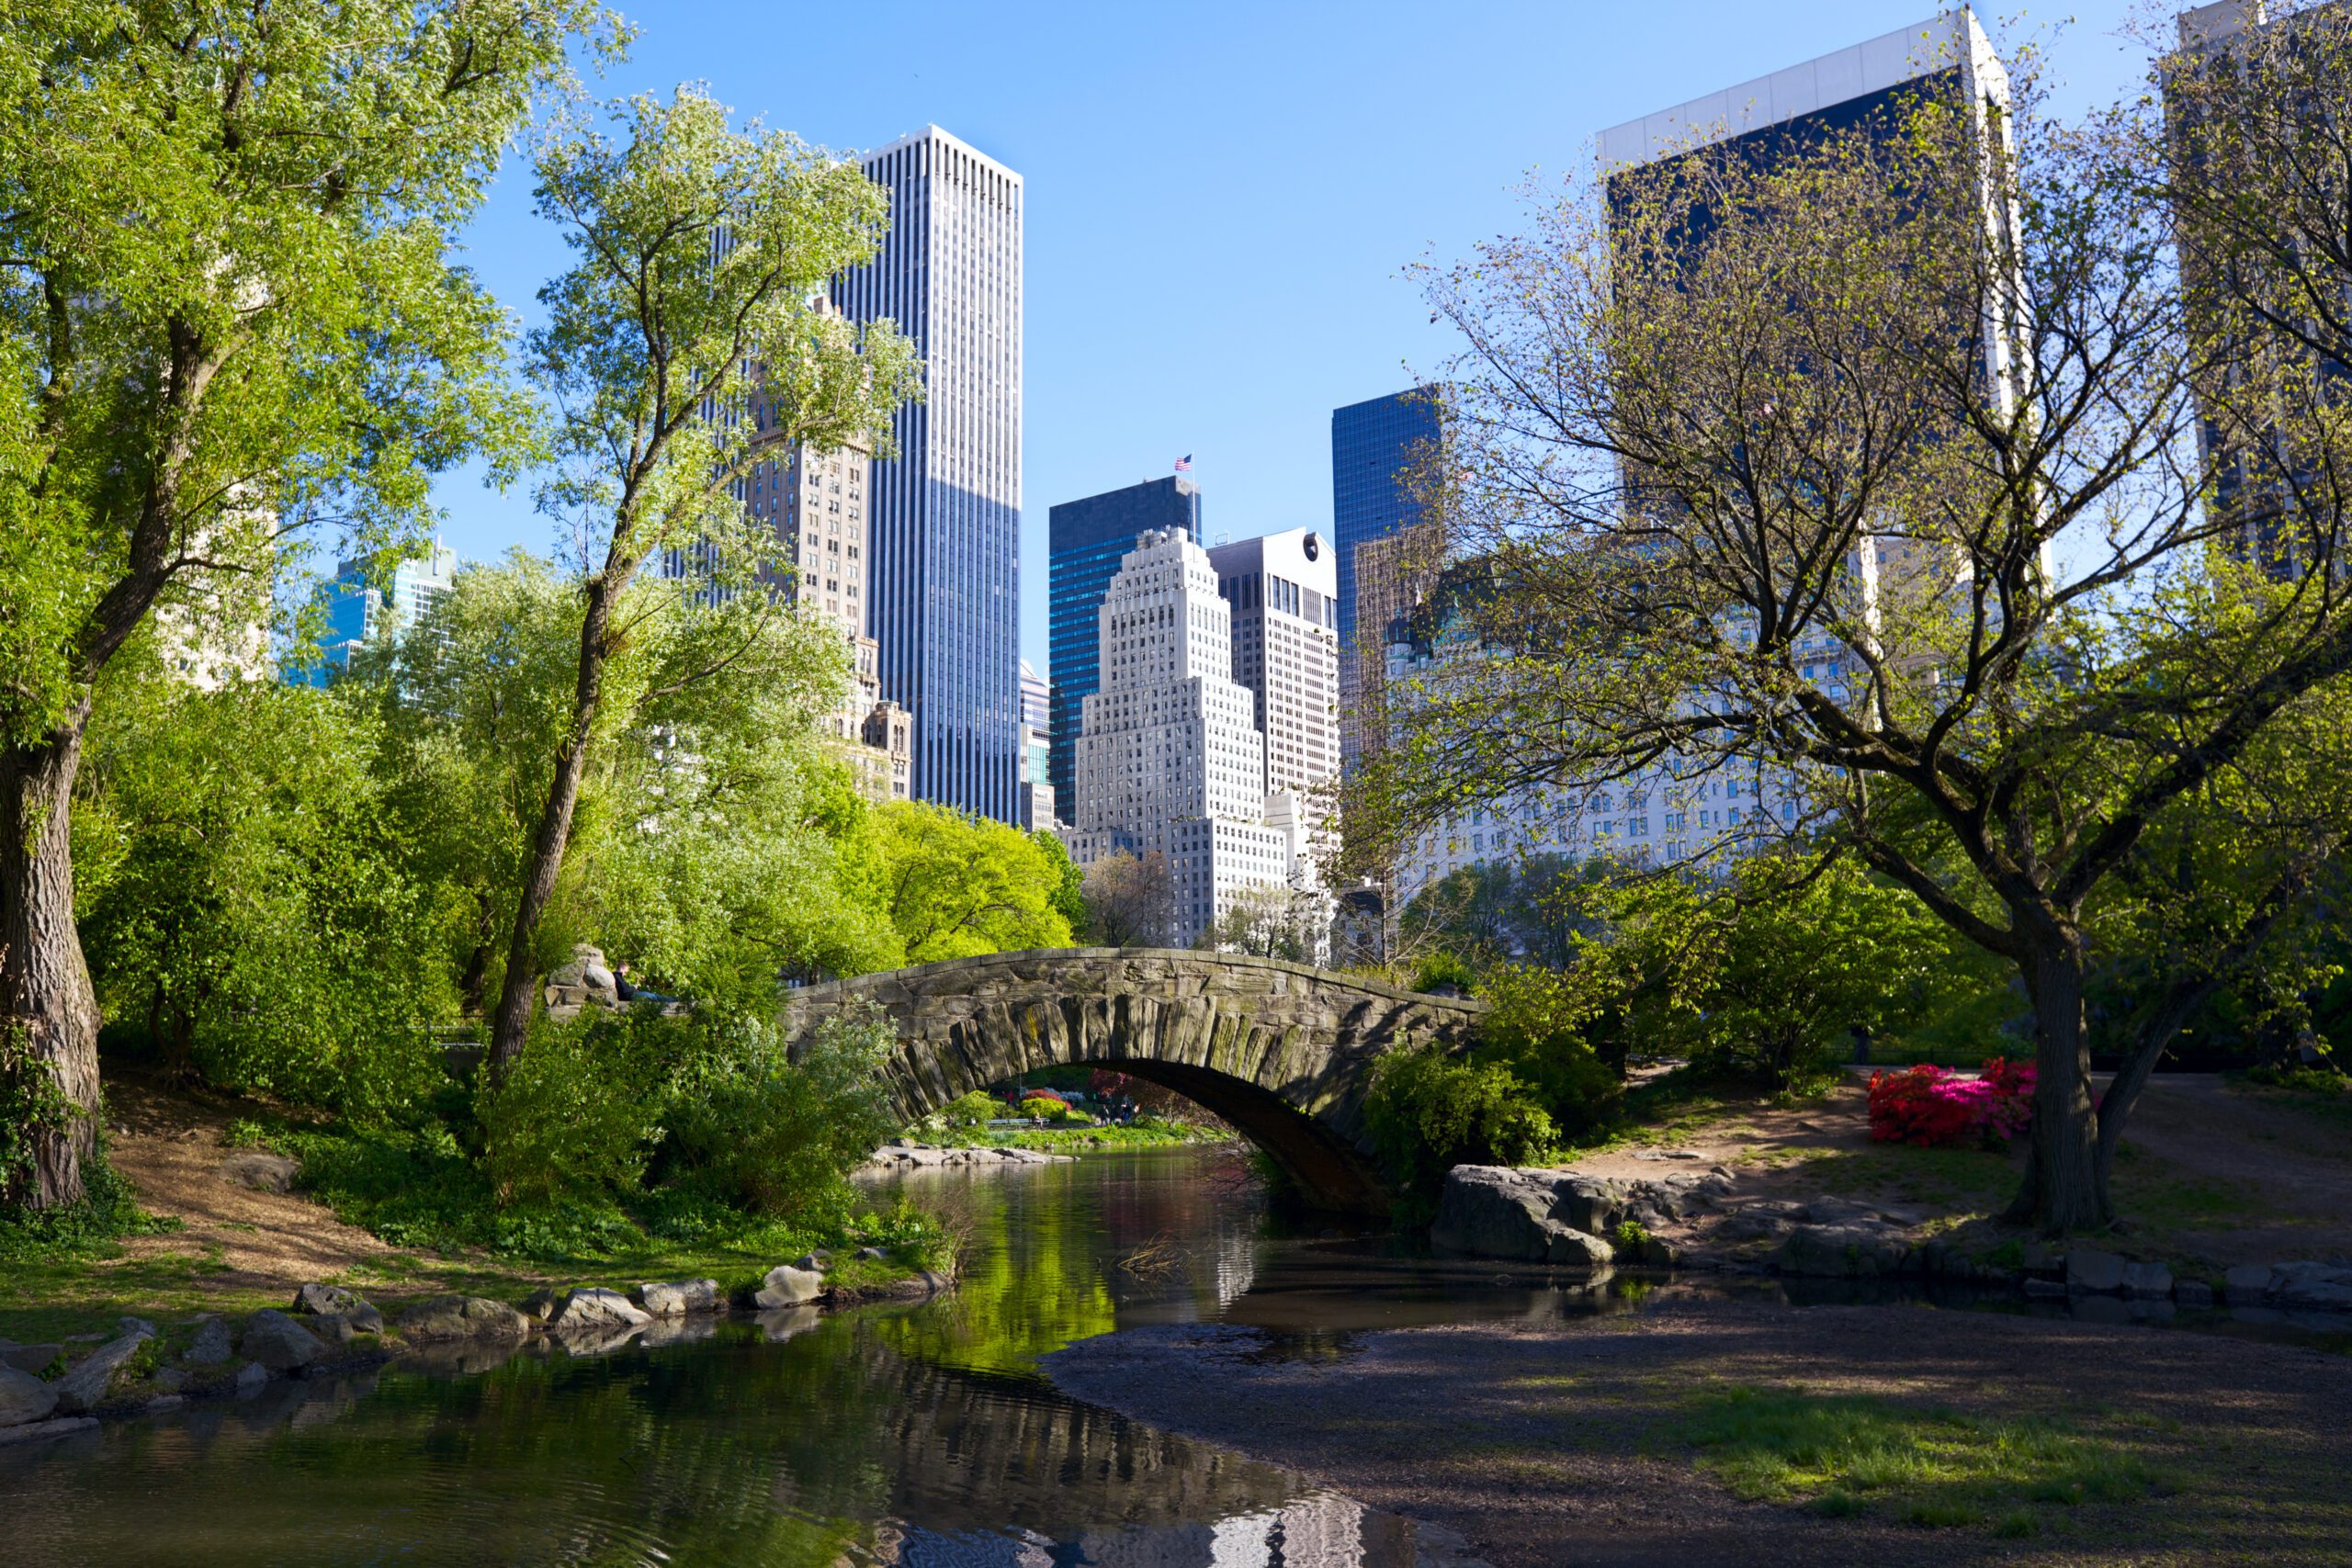 Central Park and Manhattan skyline, New York City